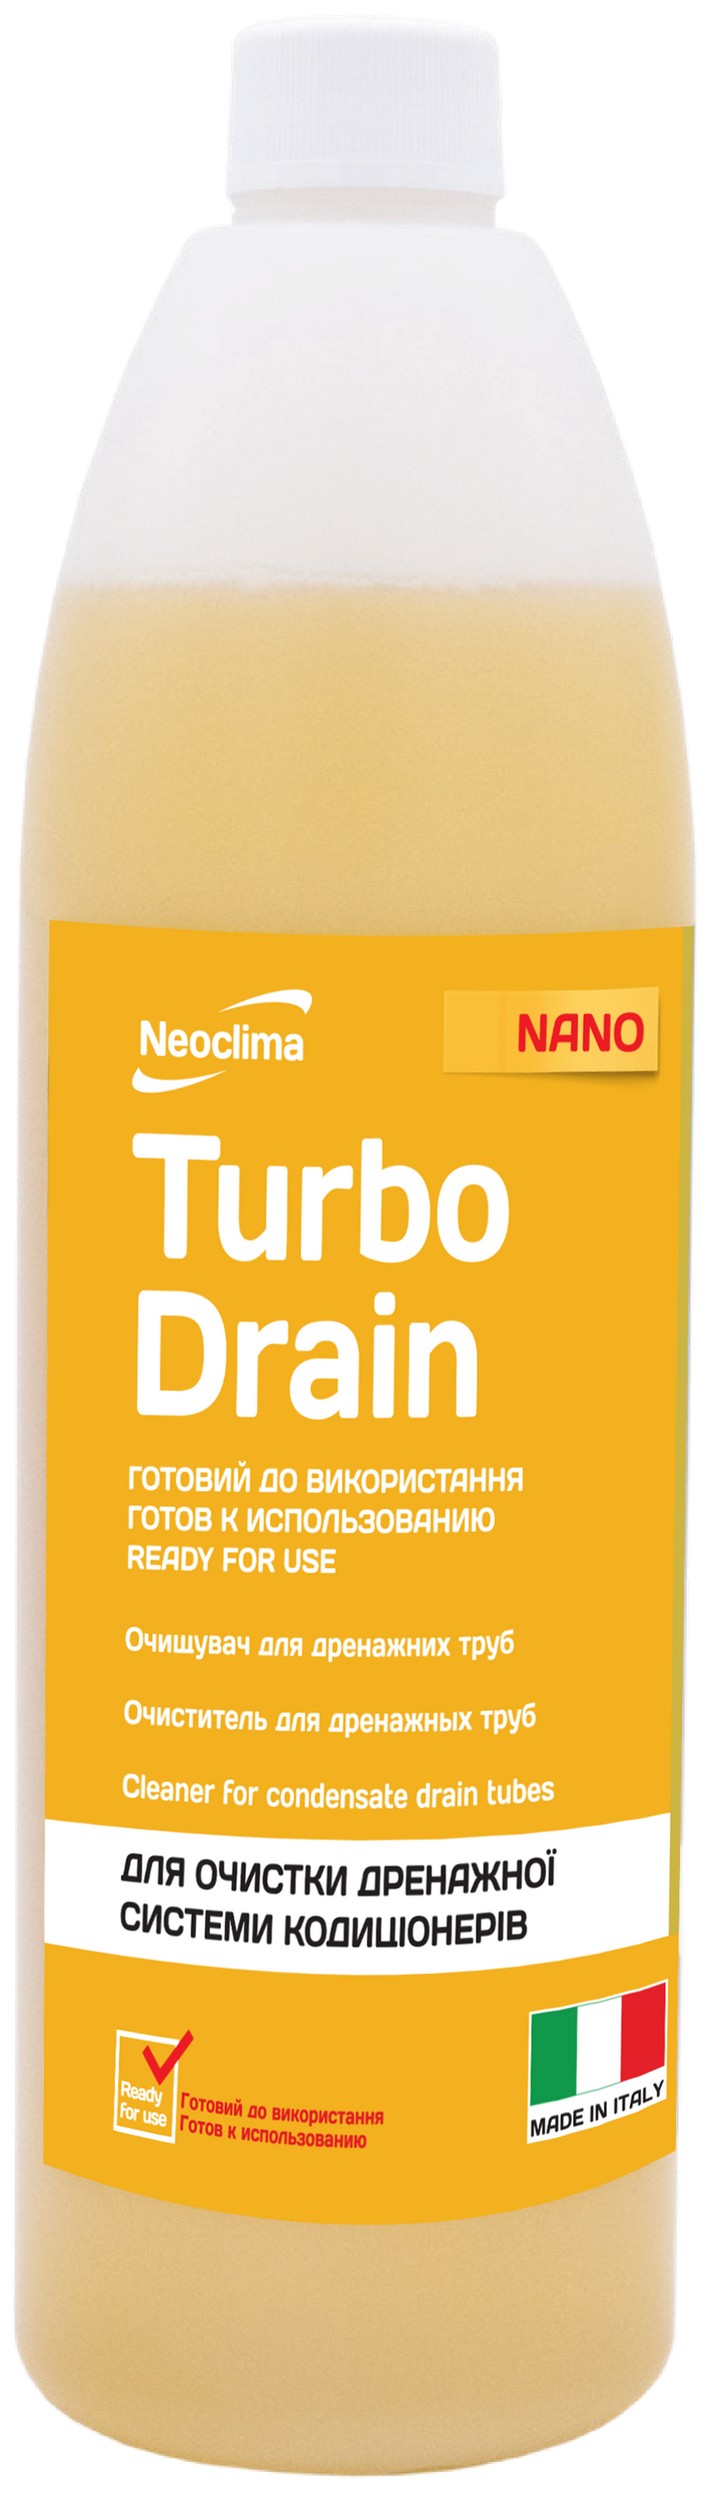 Neoclima Тurbo Drain 1 л, готовый раствор